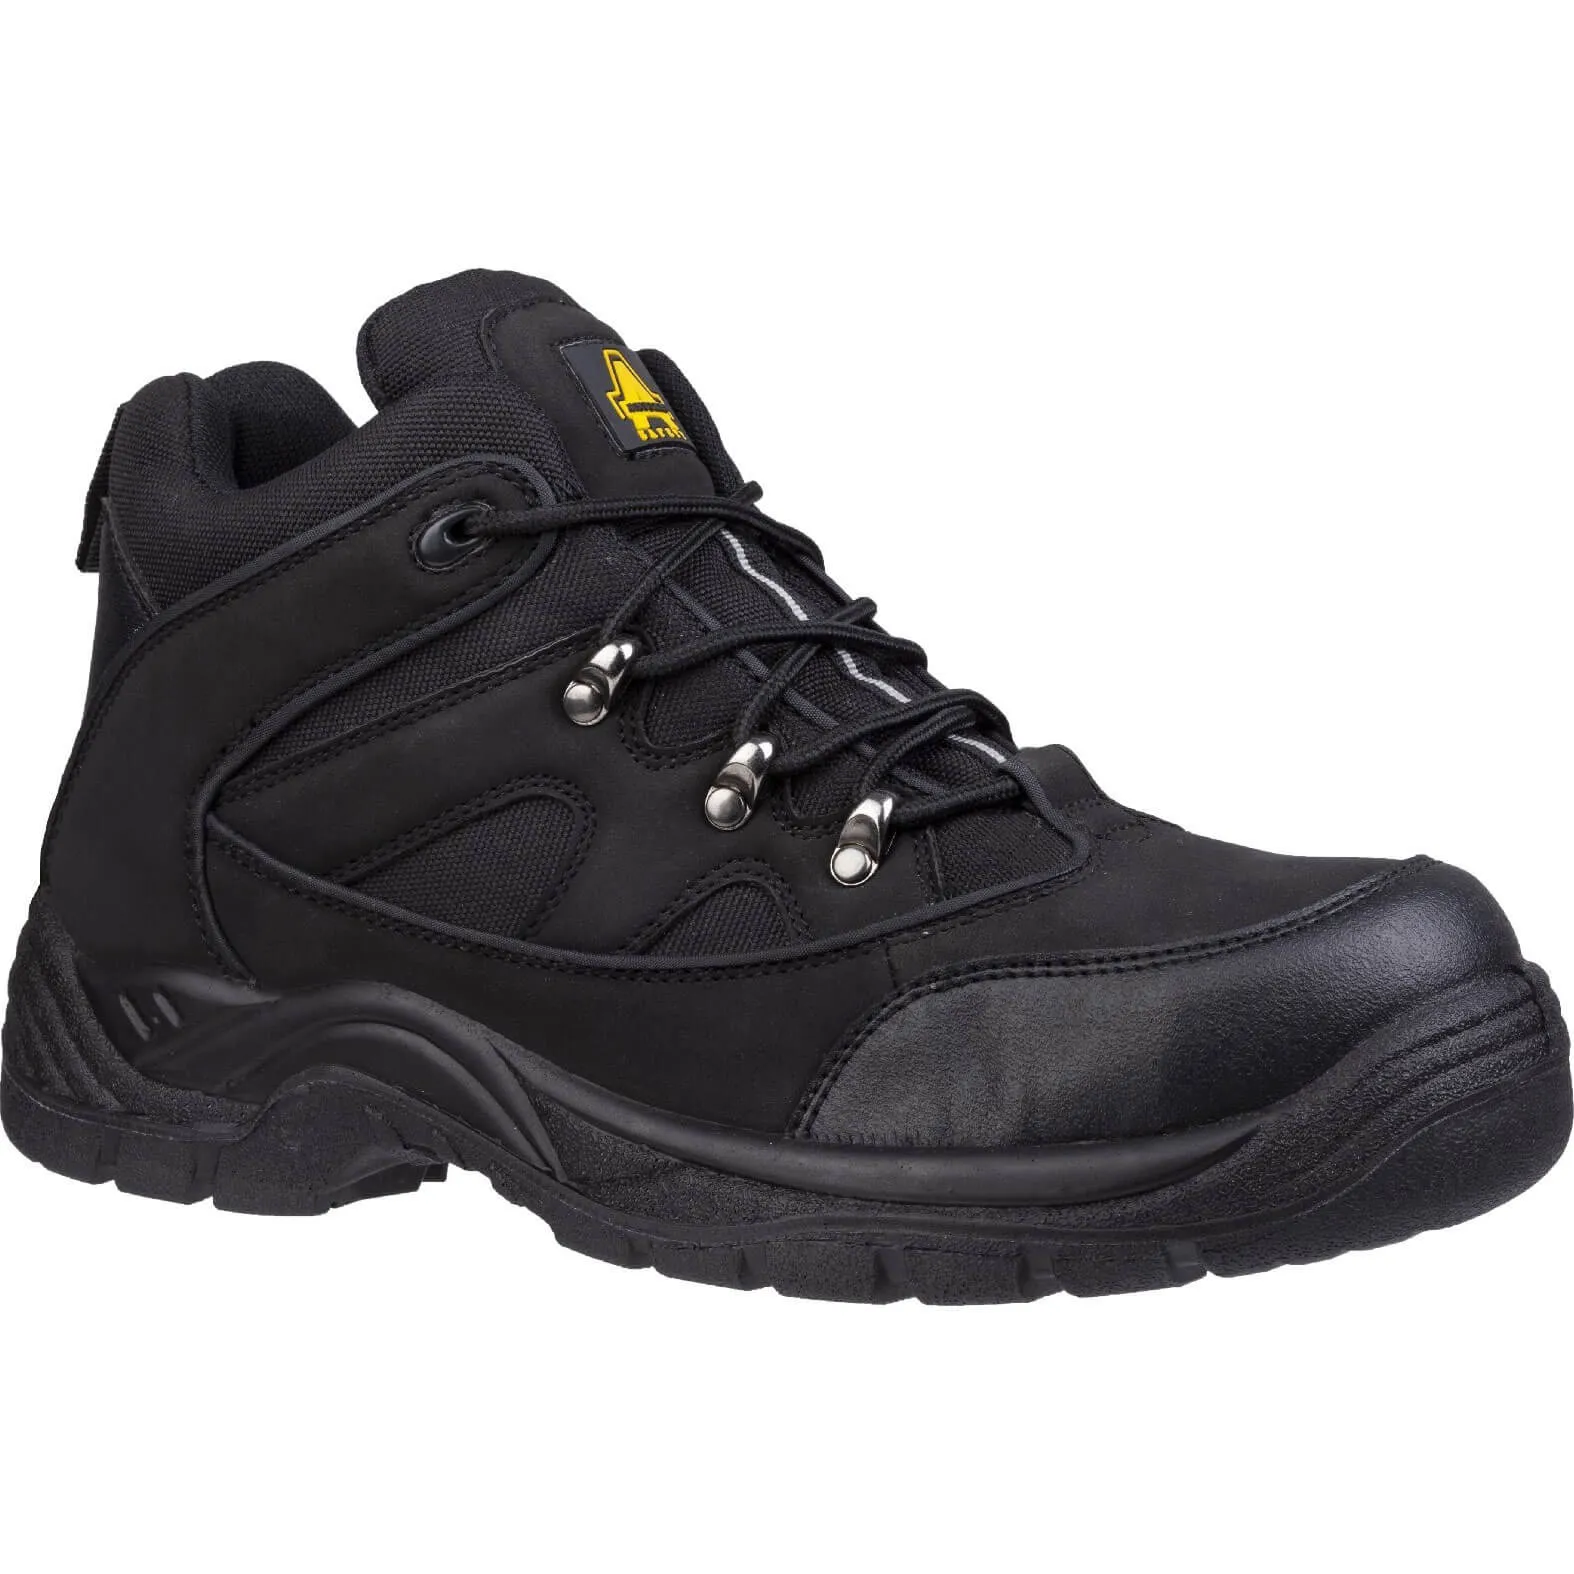 Amblers Mens Safety FS151 Vegan Friendly Safety Boots - Black, Size 4